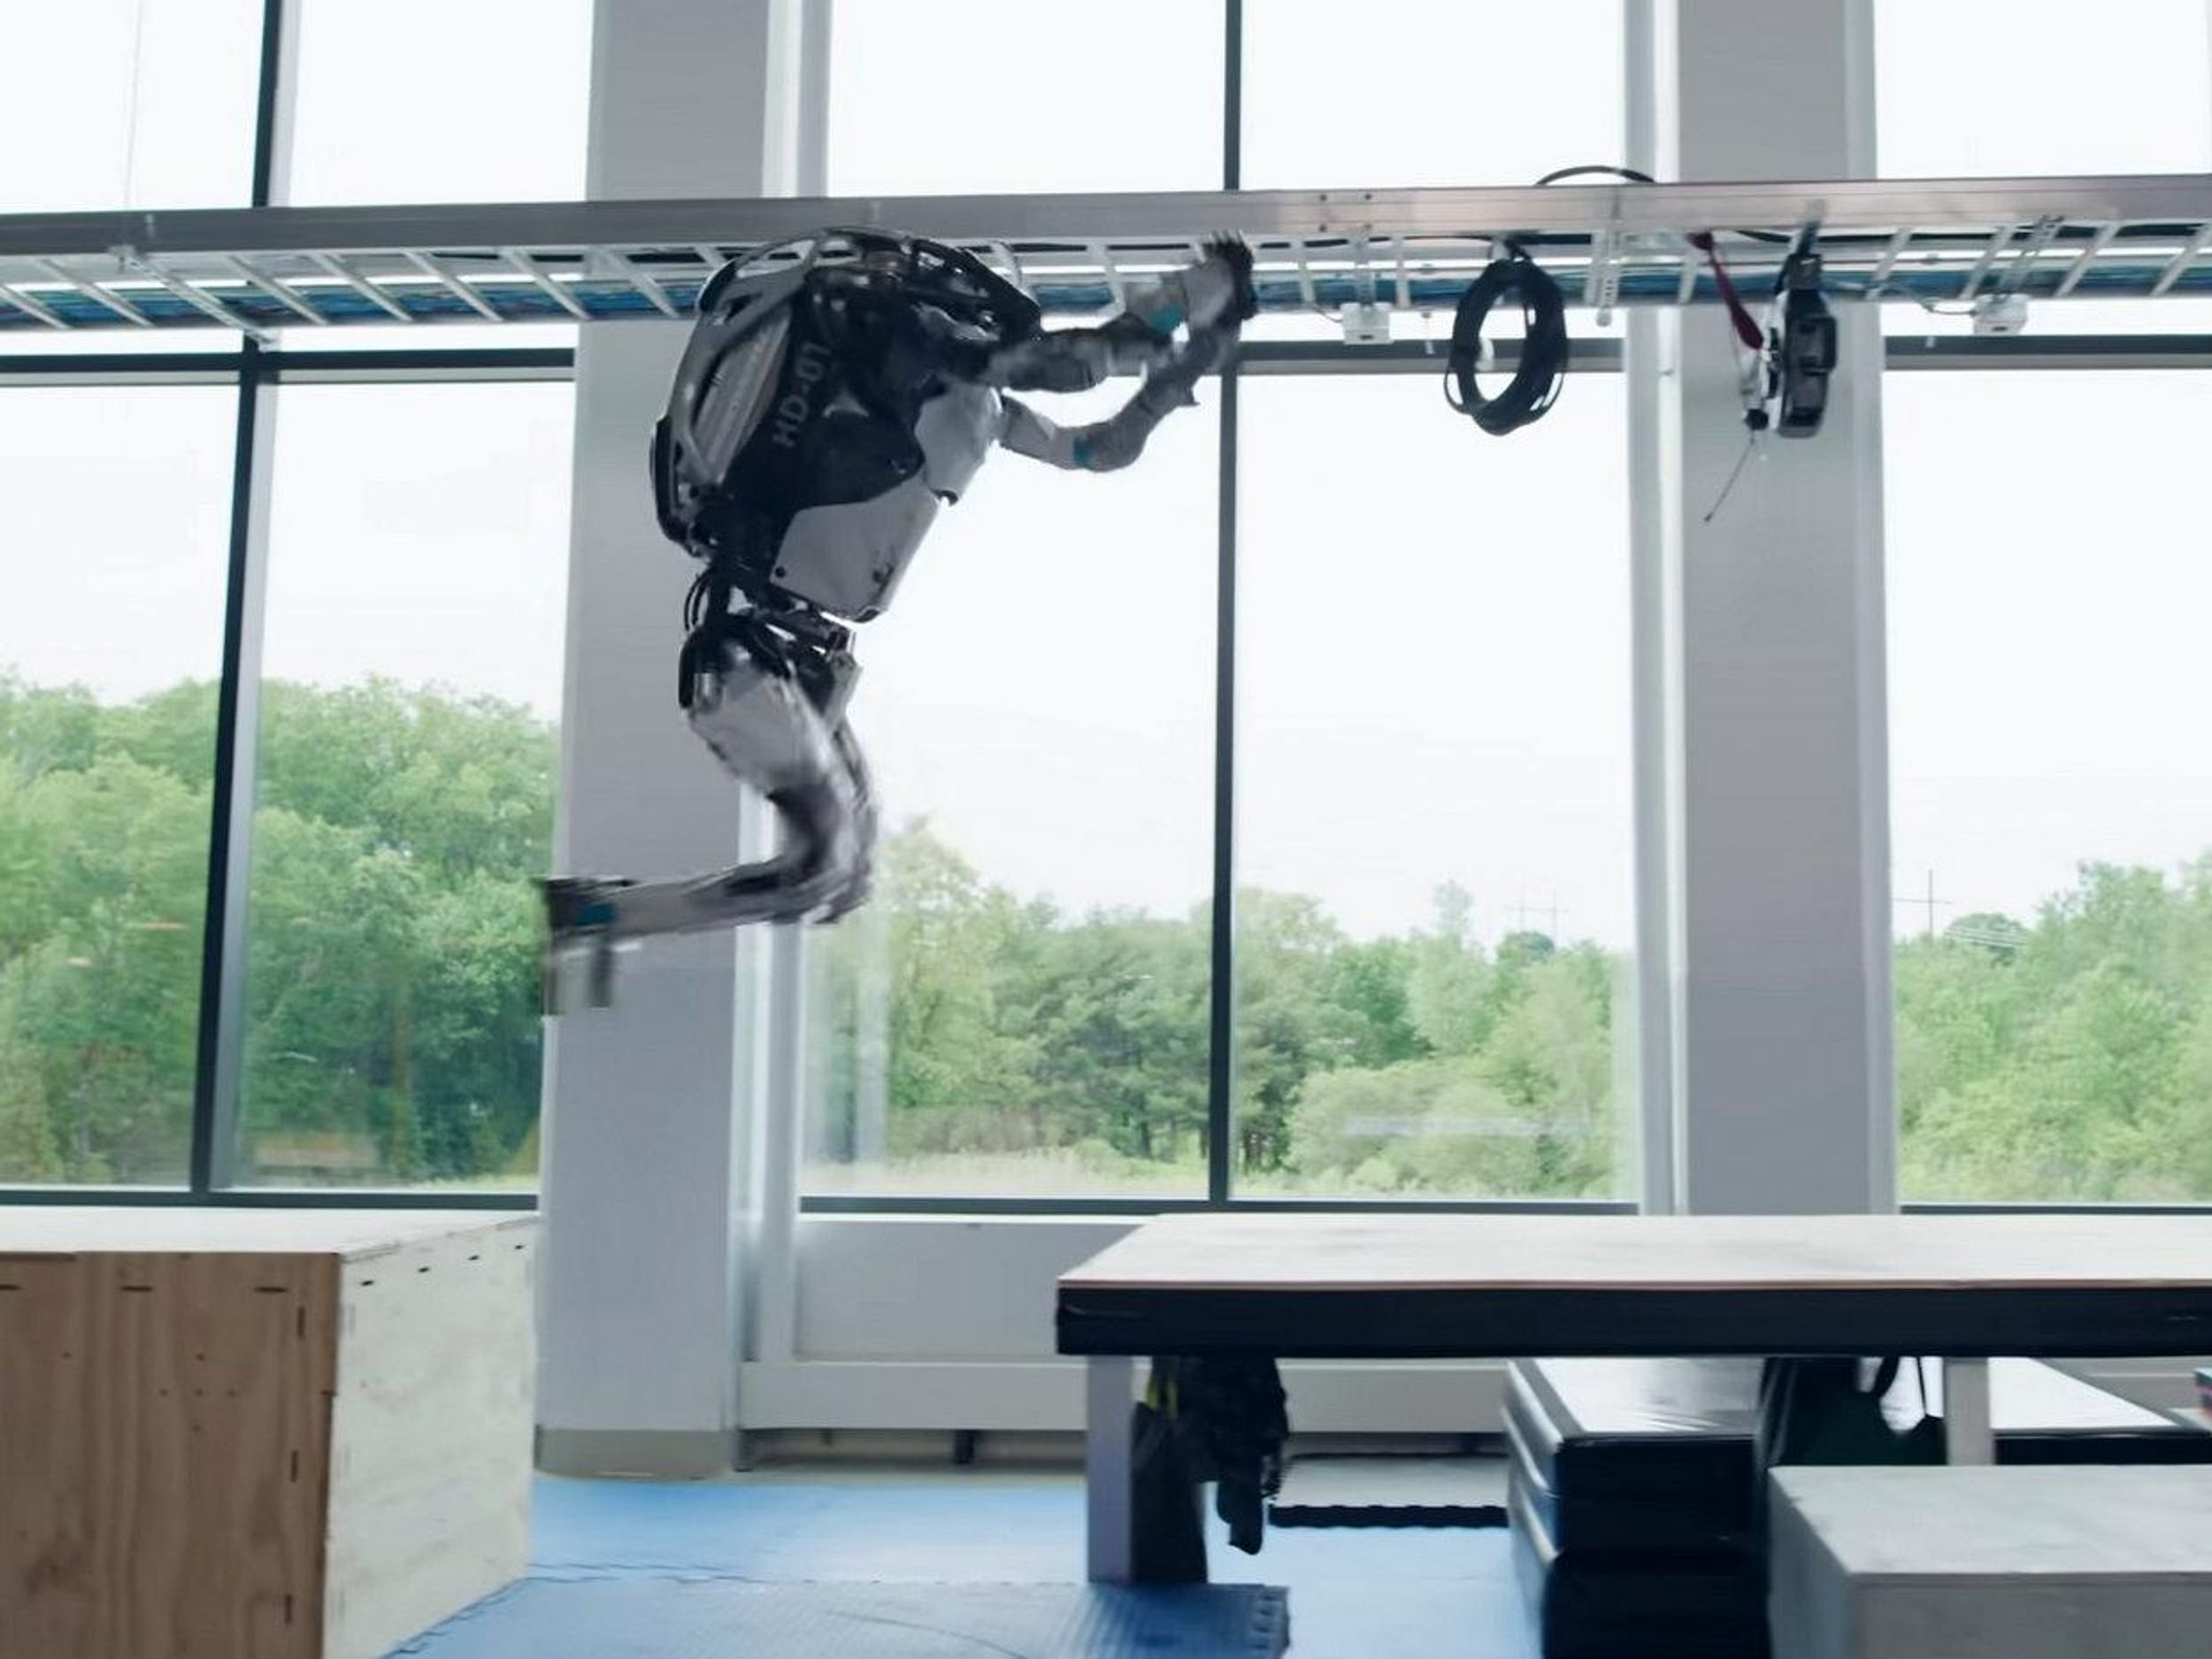 Boston Dynamics Atlas robot jumping across a gap